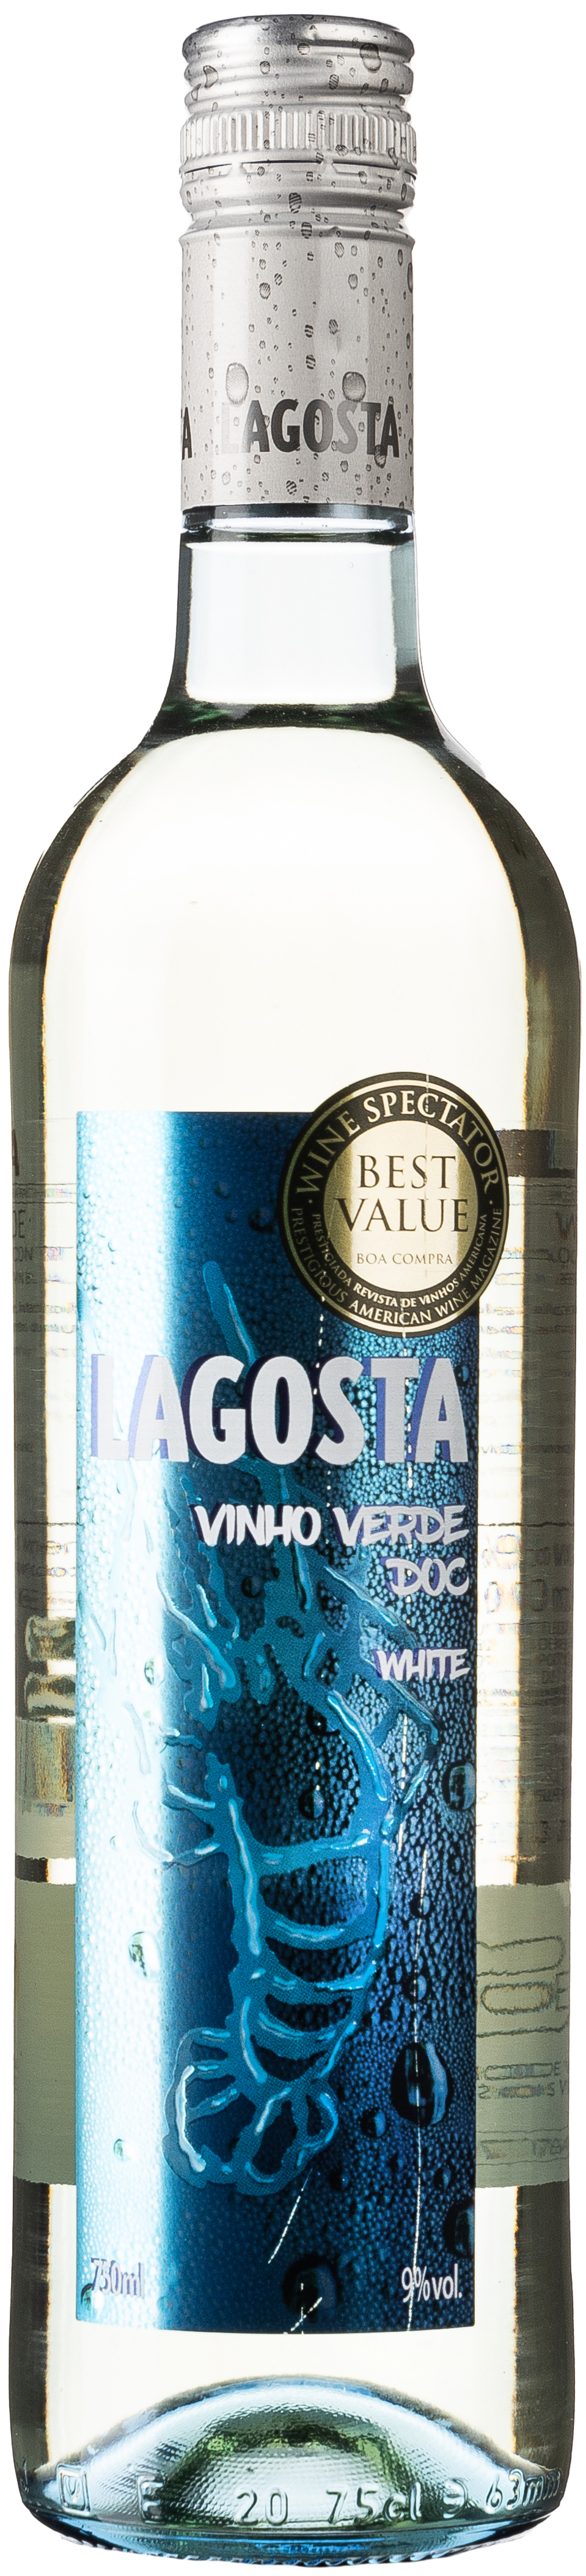 Lagosta Vinho Verde trocken 9% vol. 0,75L